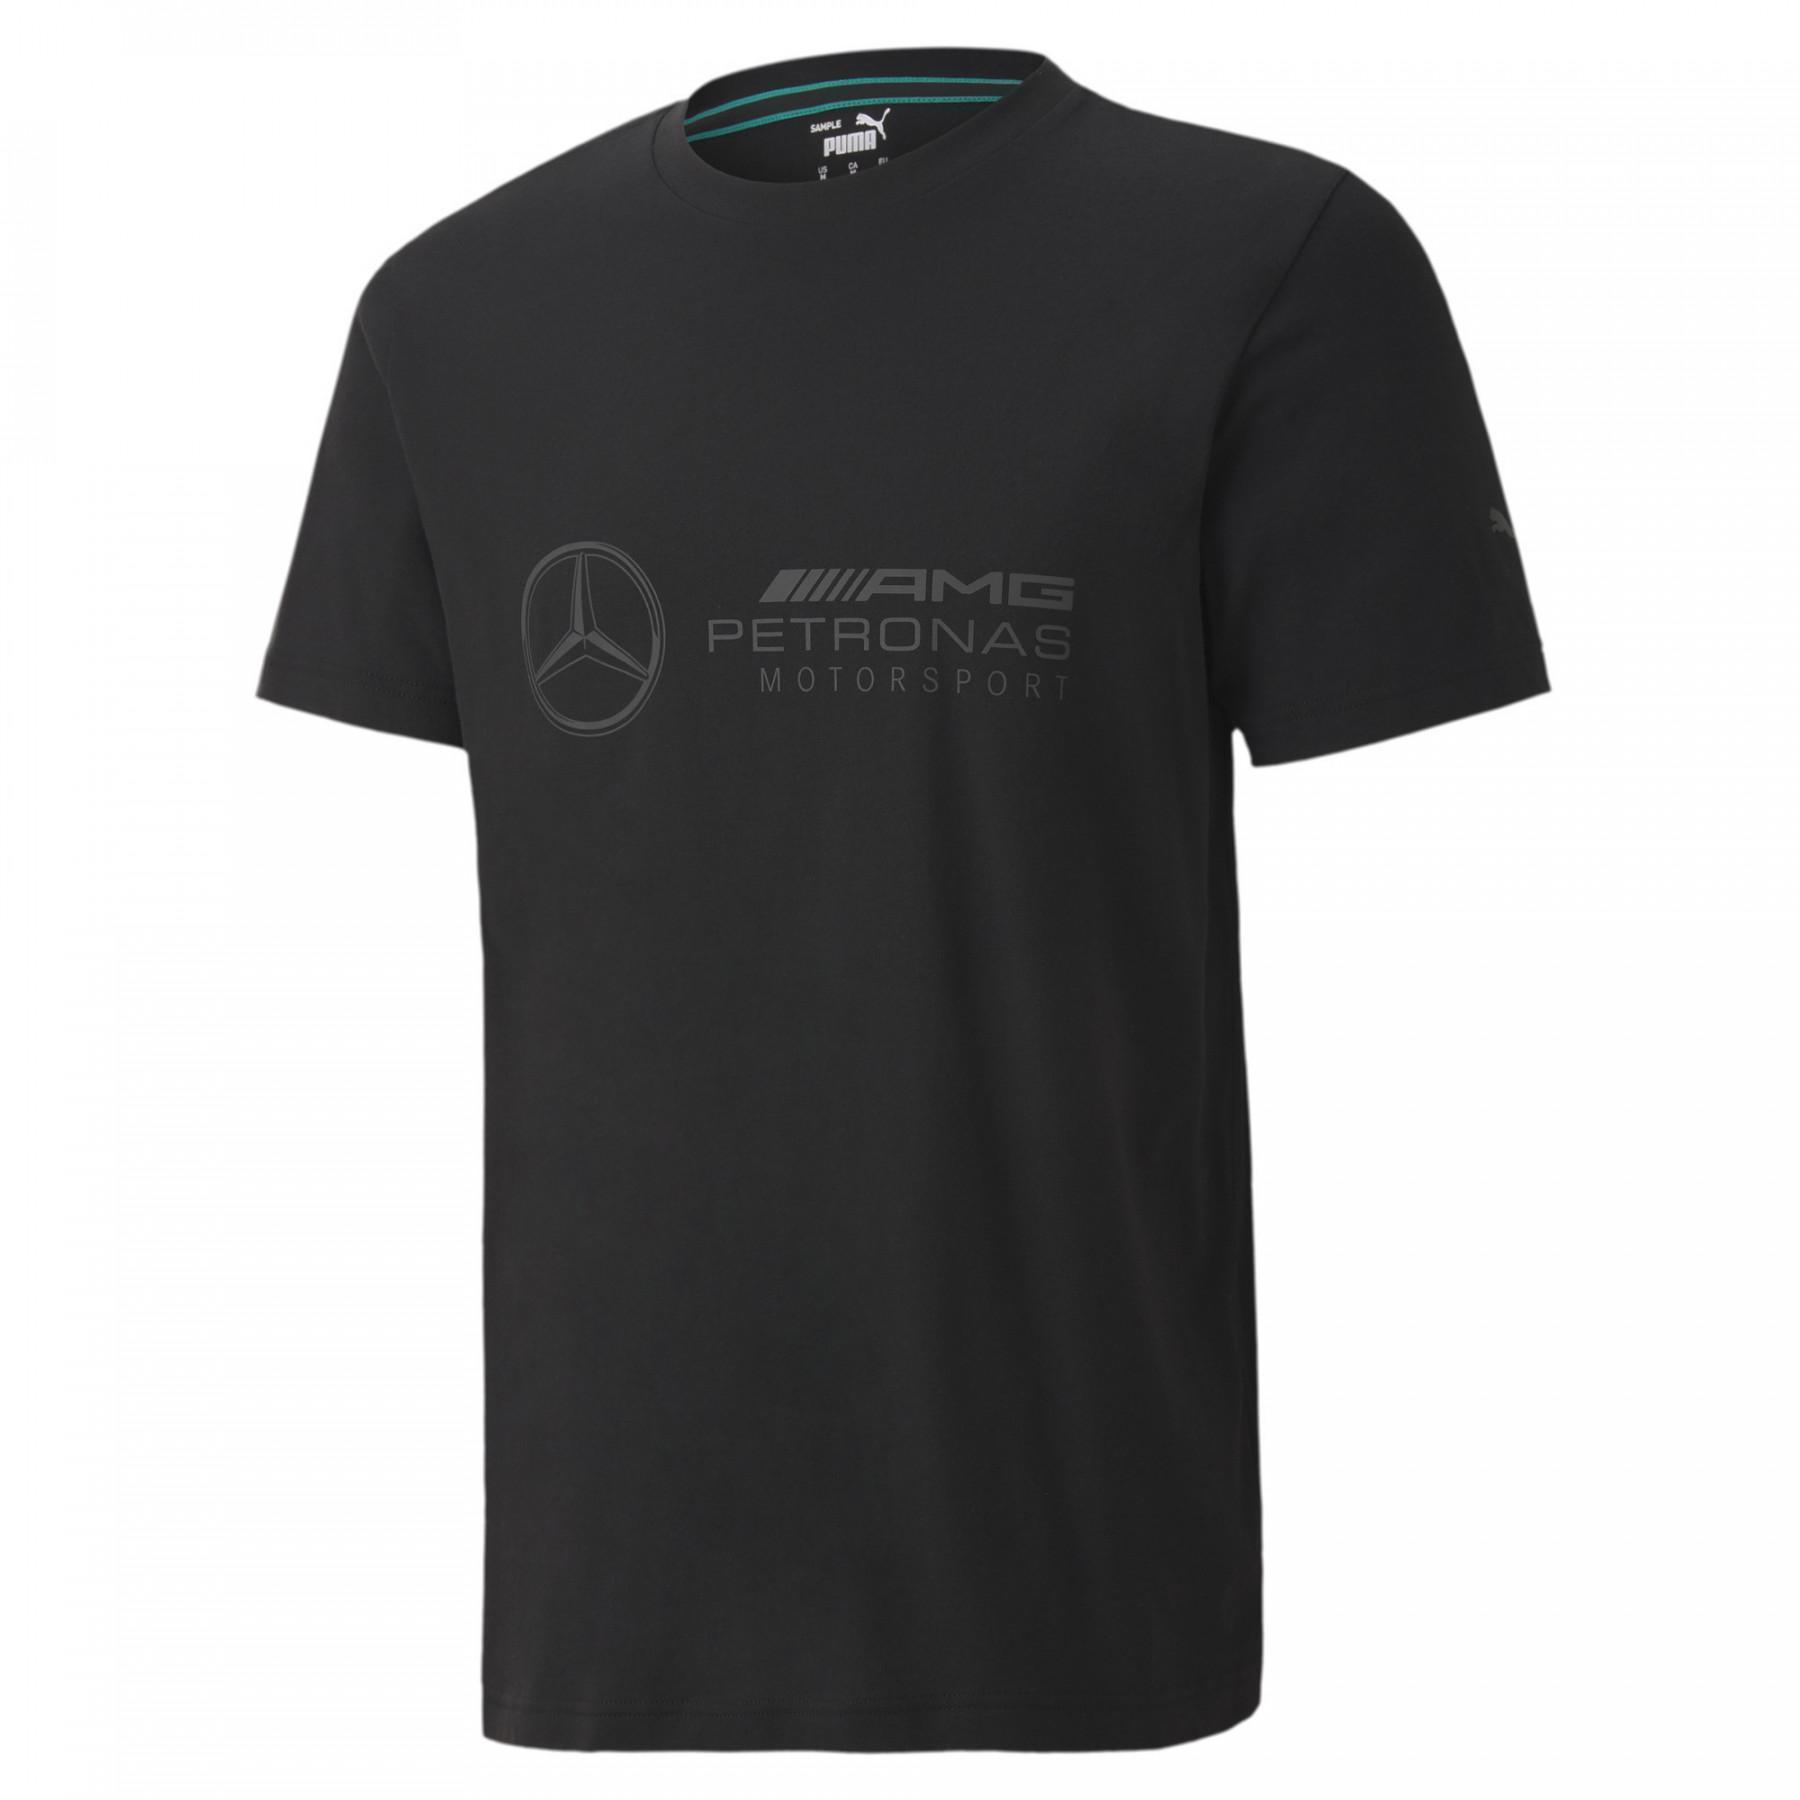 mercedes-amg petronas logo t-shirt